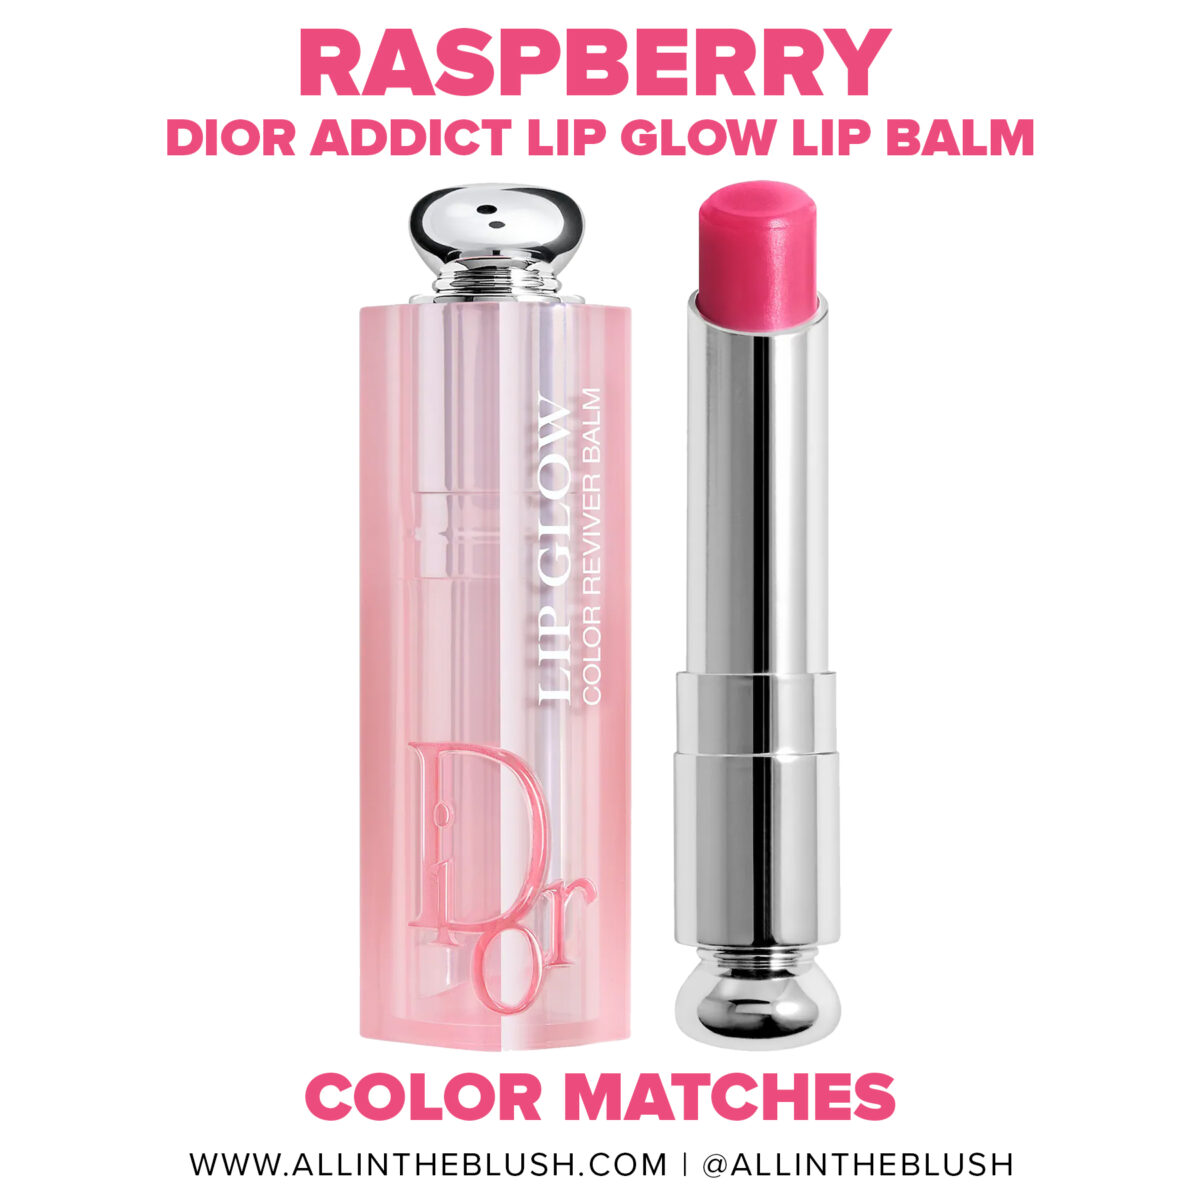 Dior Berry Raspberry Addict Lip Glow Lip Balm Dupes